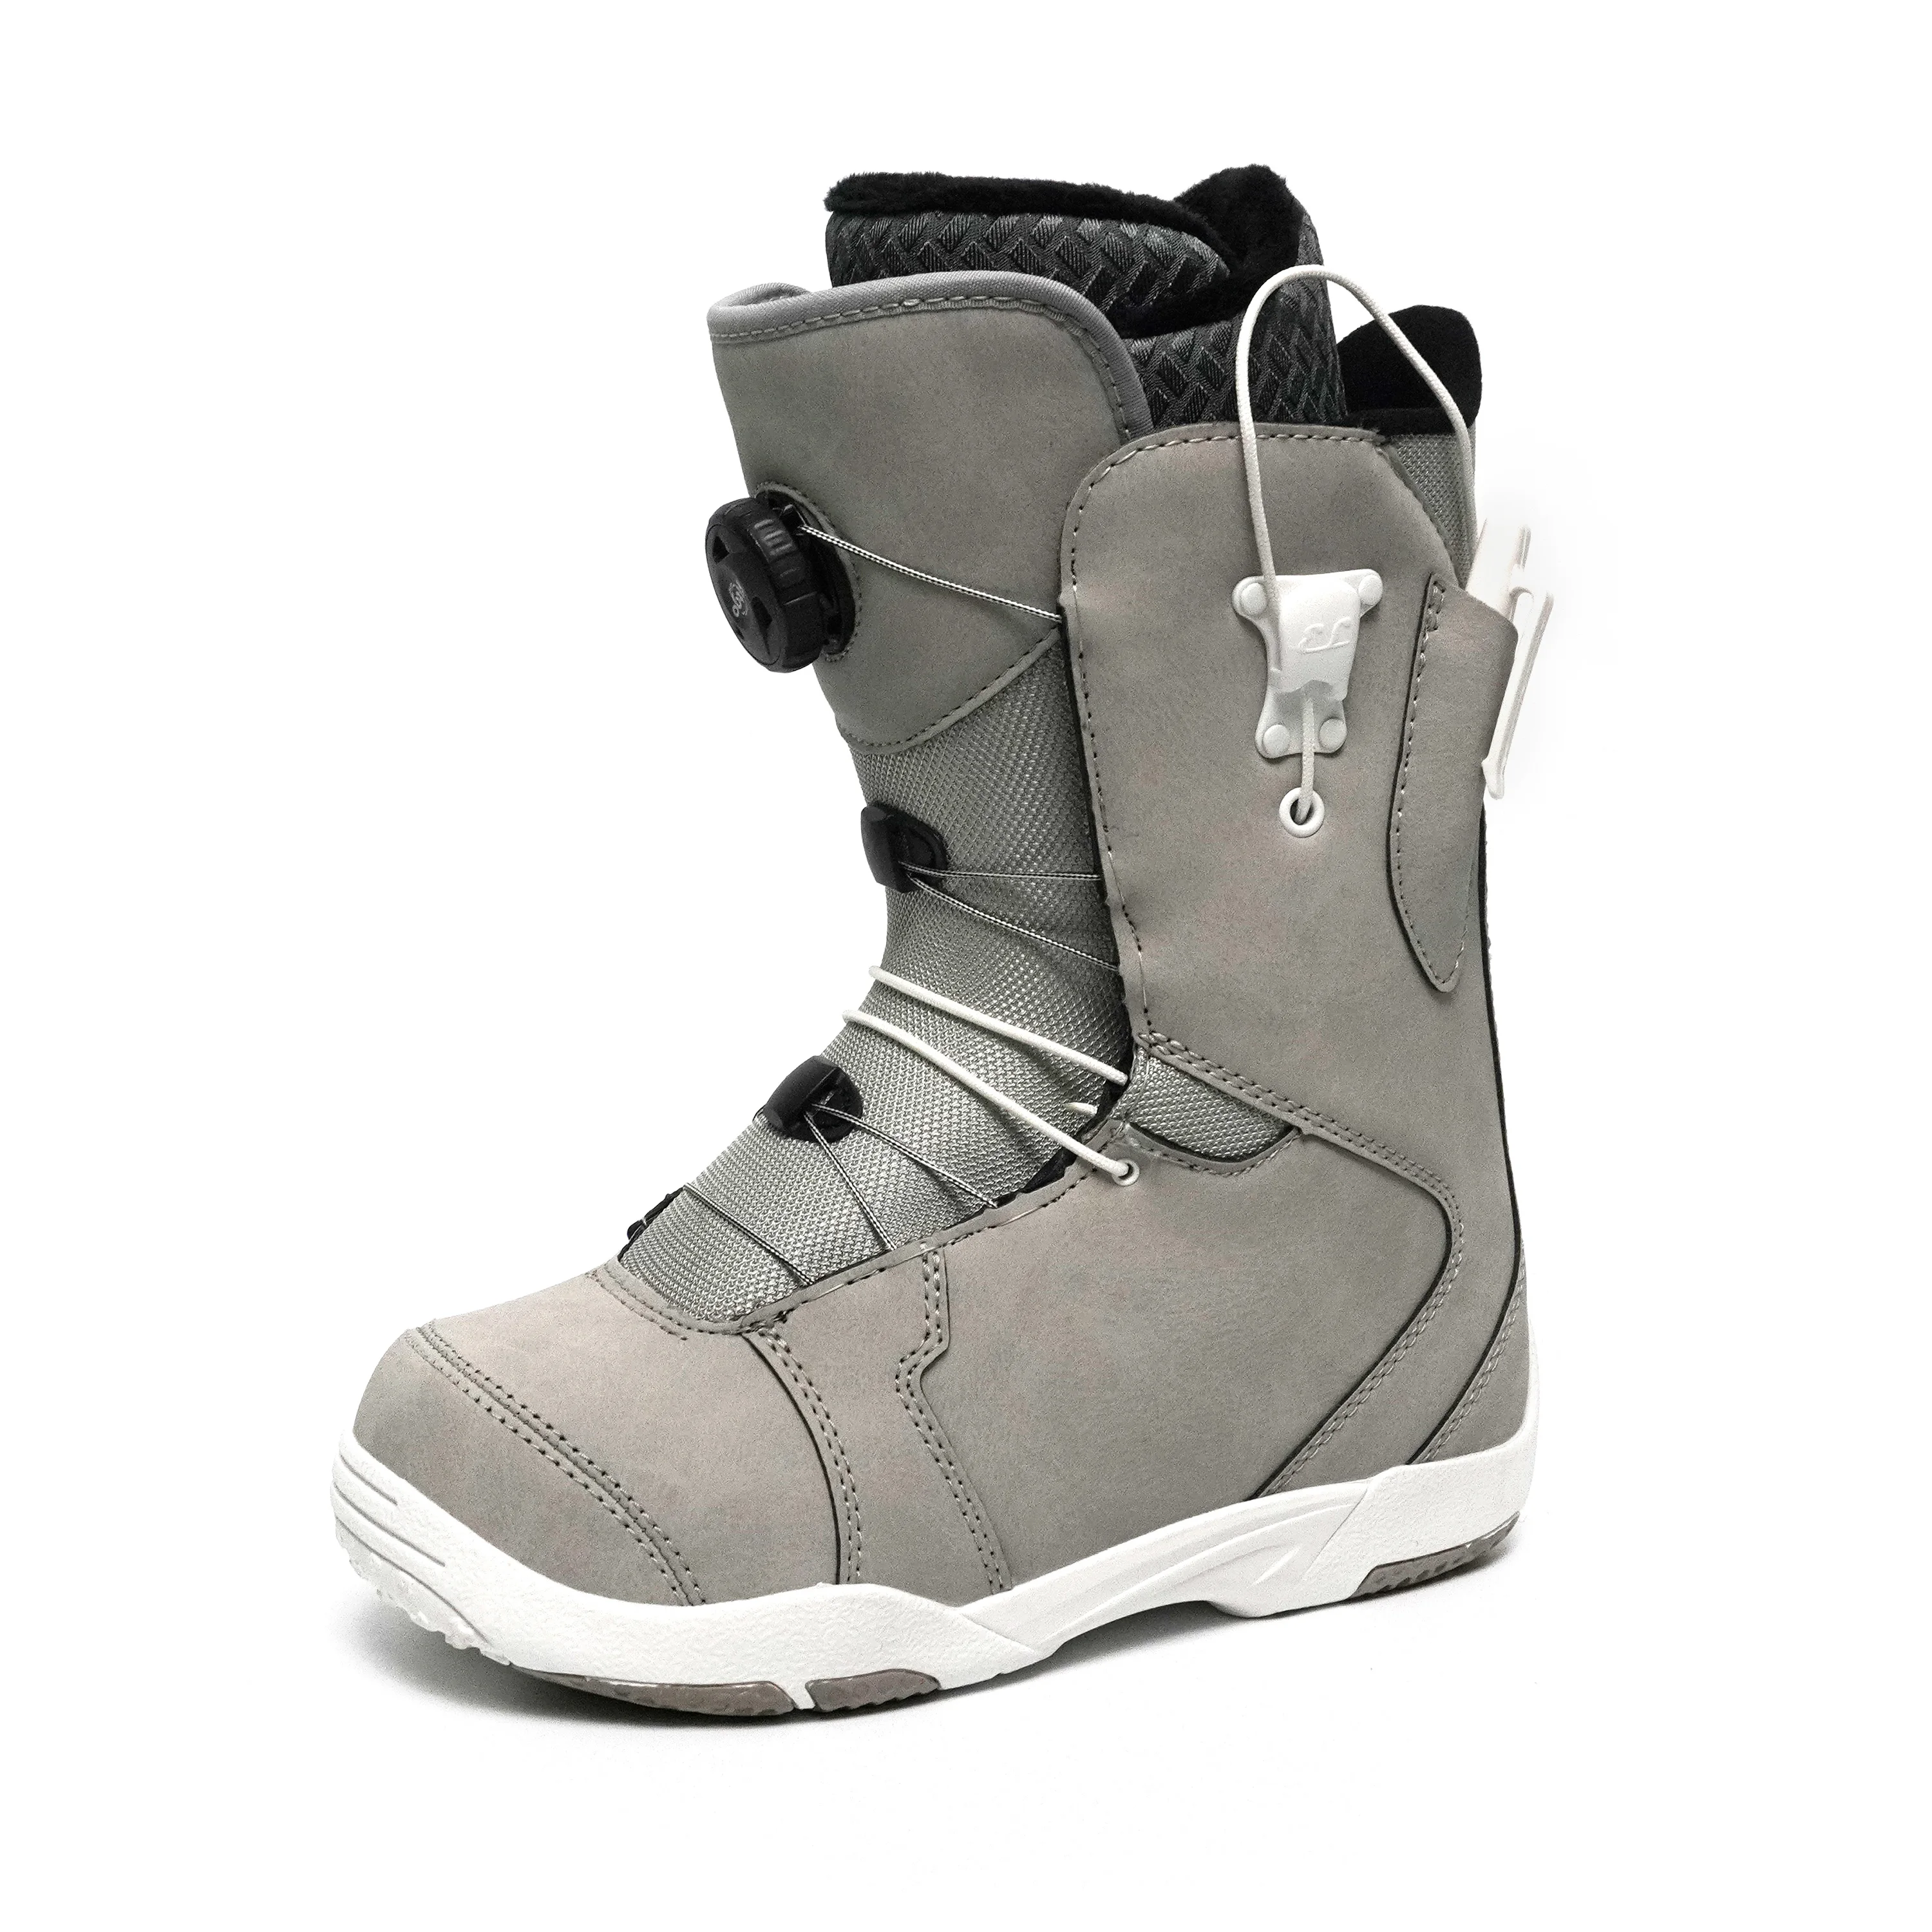 Wholesales הקמעונאי באיכות גבוהה סנובורד מחייב מגפי שלג נעלי סנובורד מגפי גבר - 0